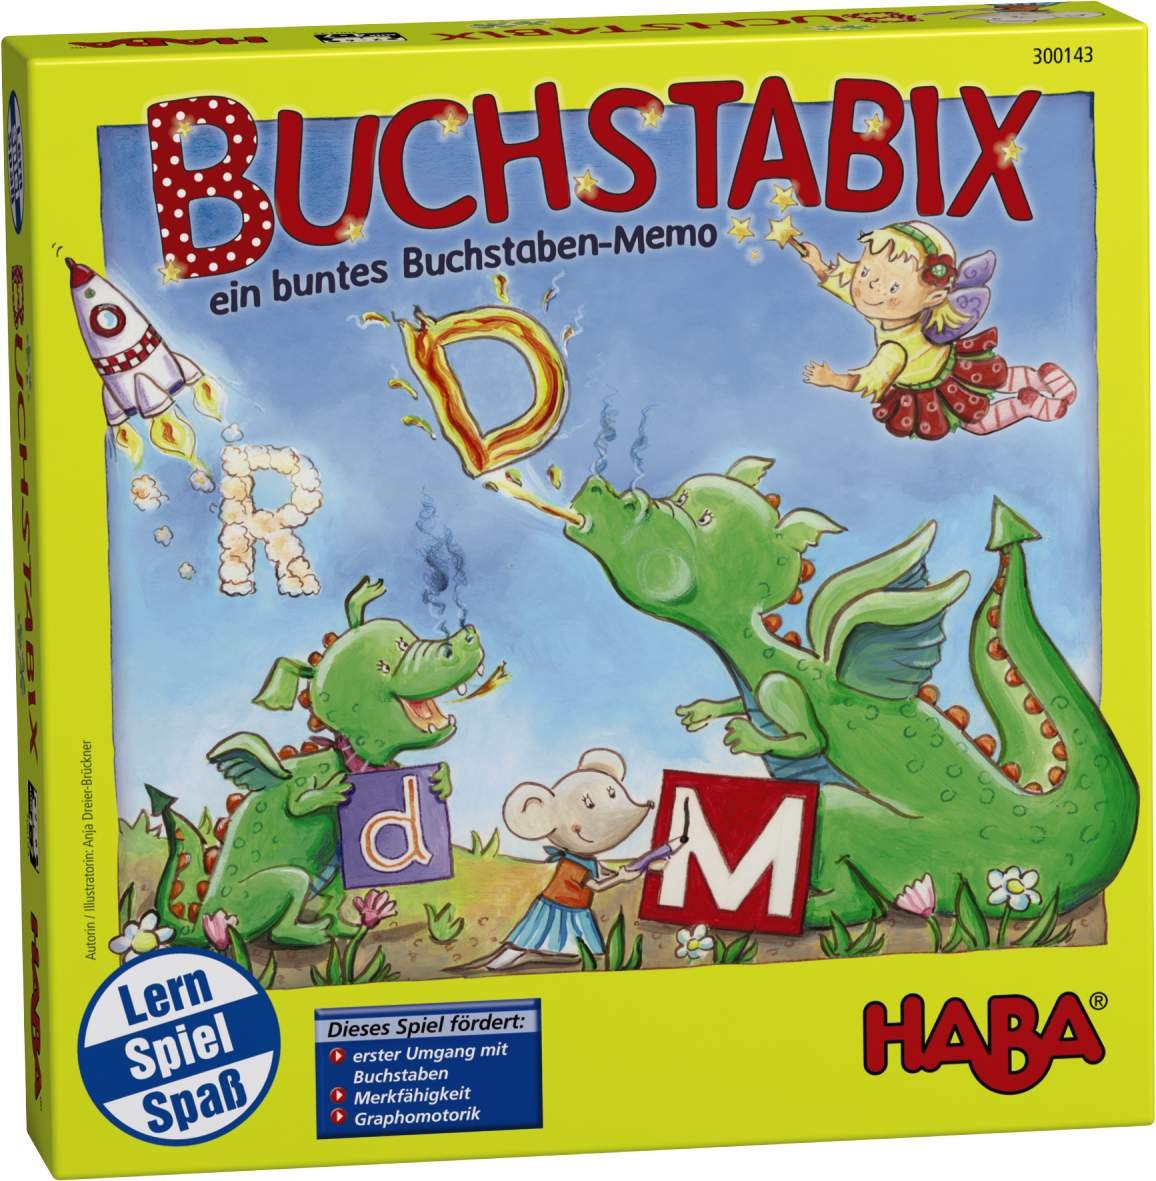 Haba Buchstabix Game